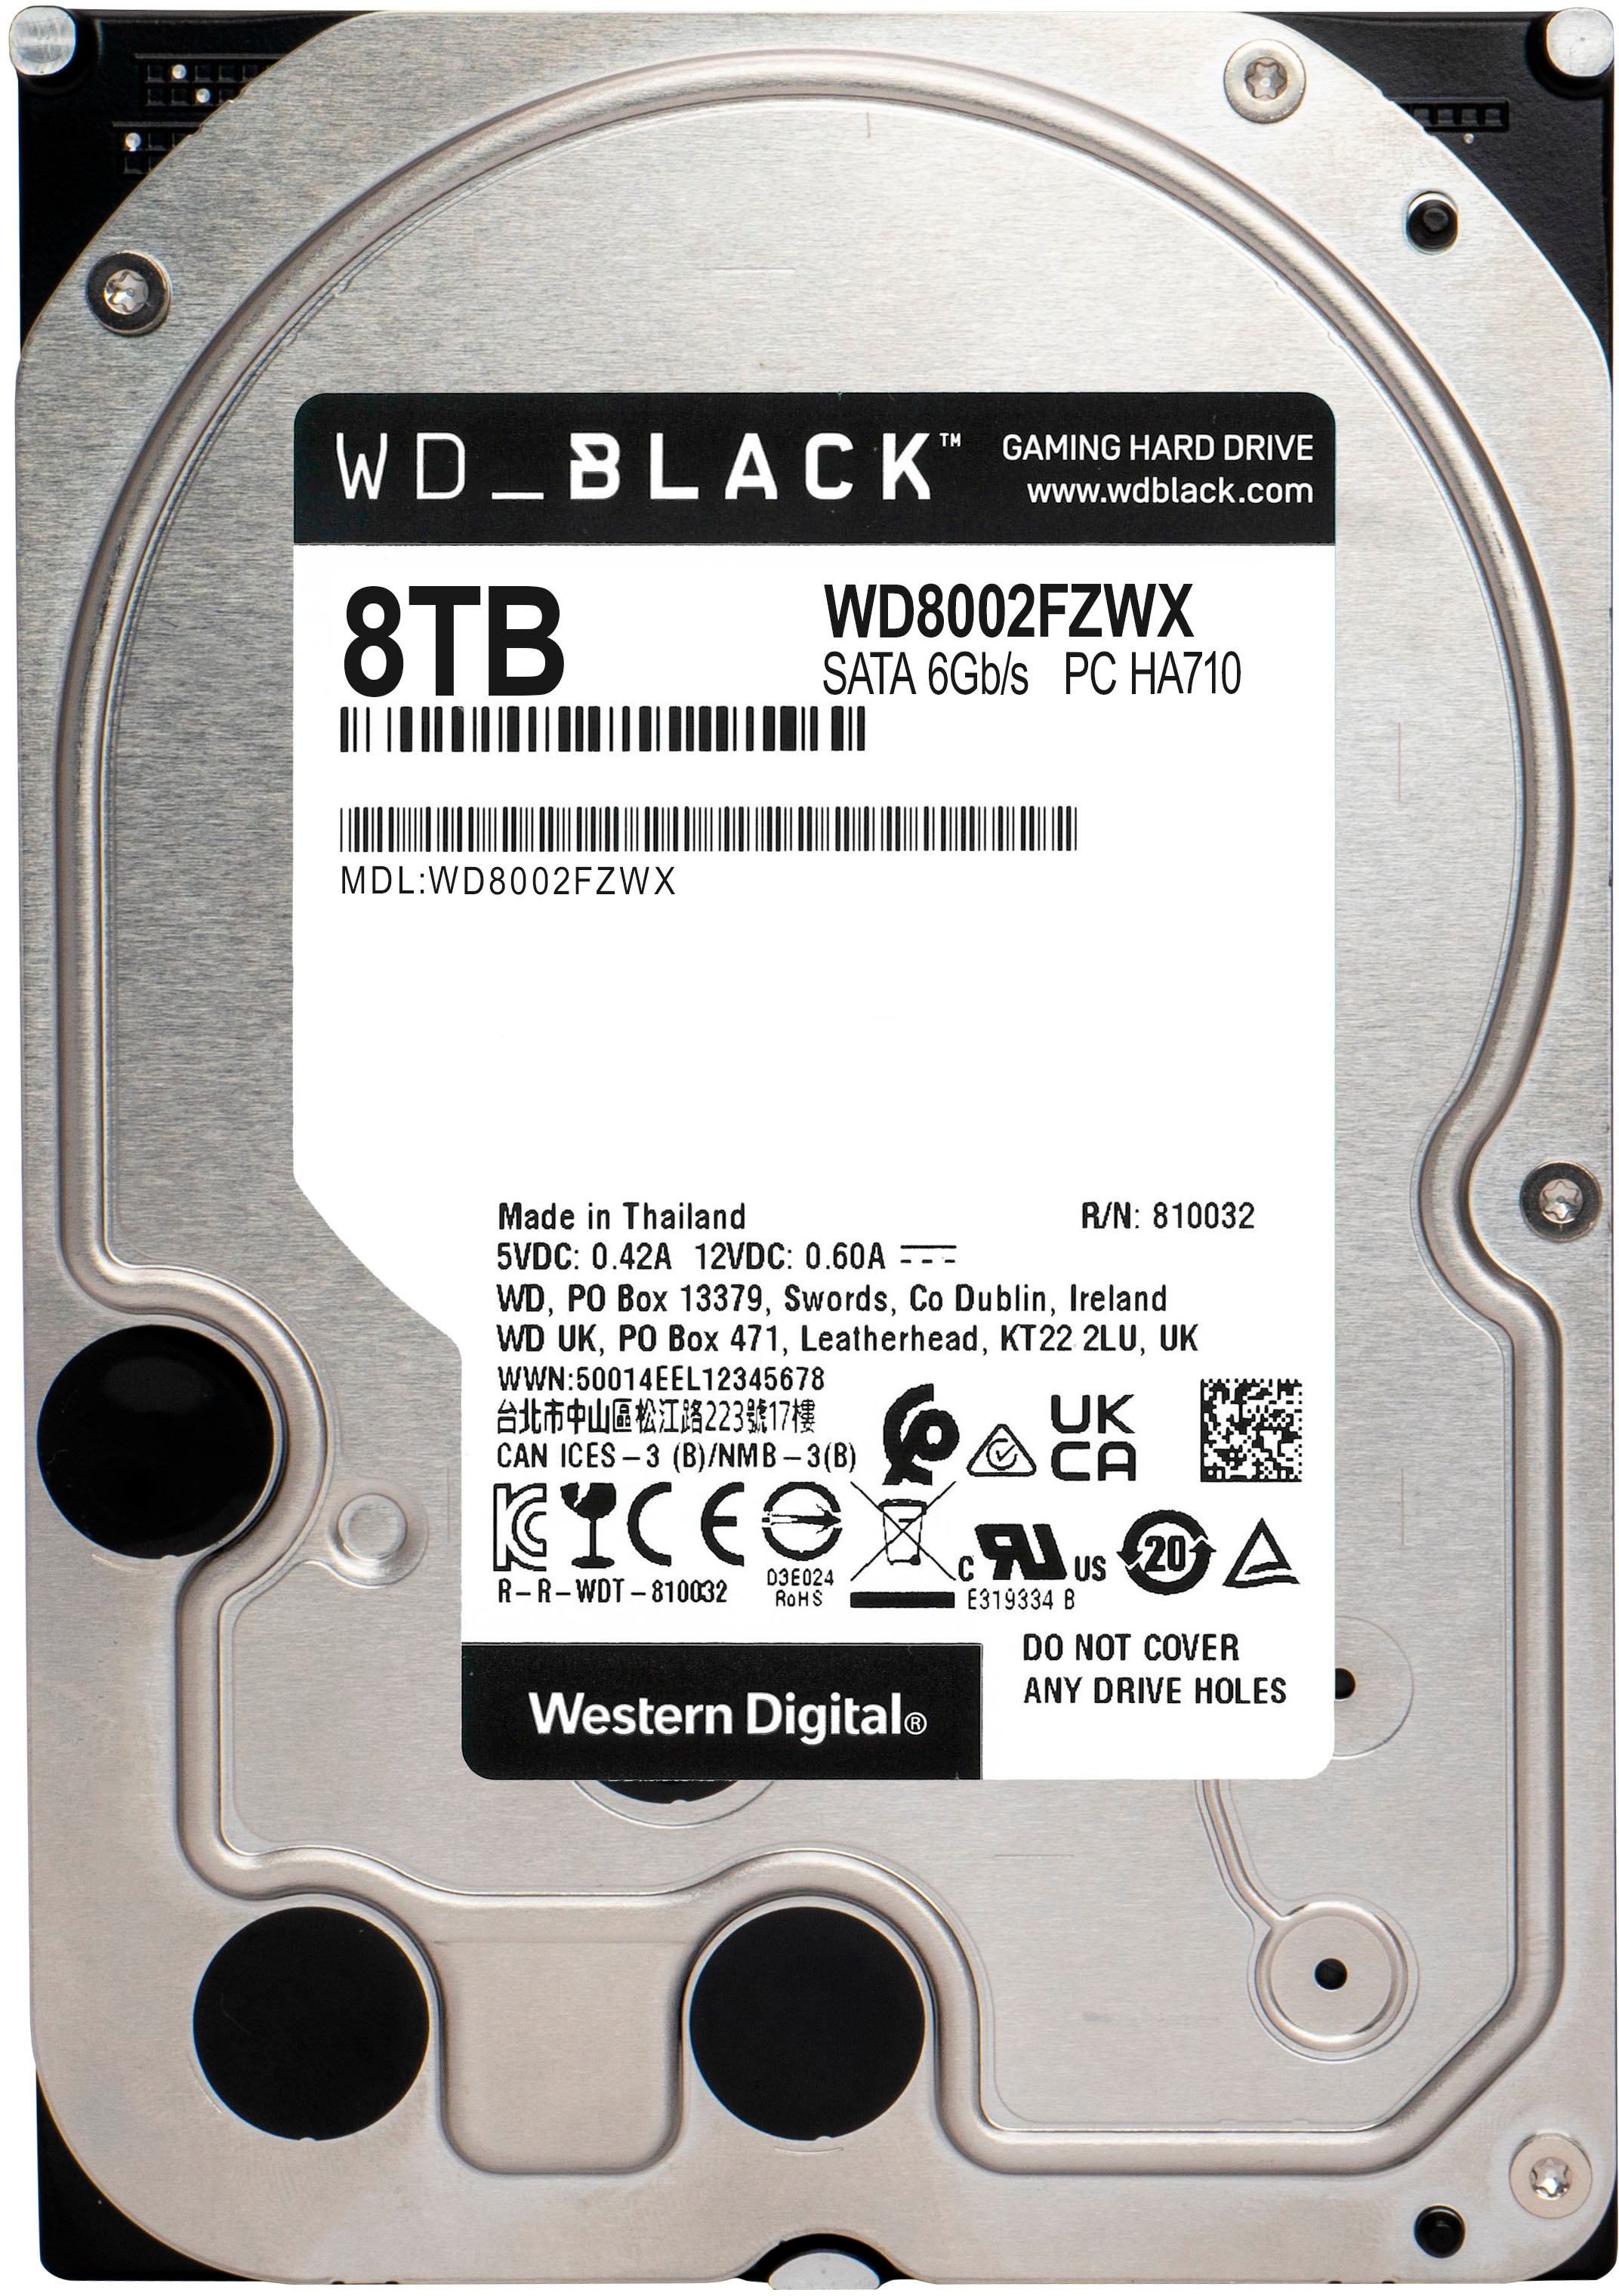 WD BLACK Gaming Internal SATA Hard Drive for Desktops - Best Buy